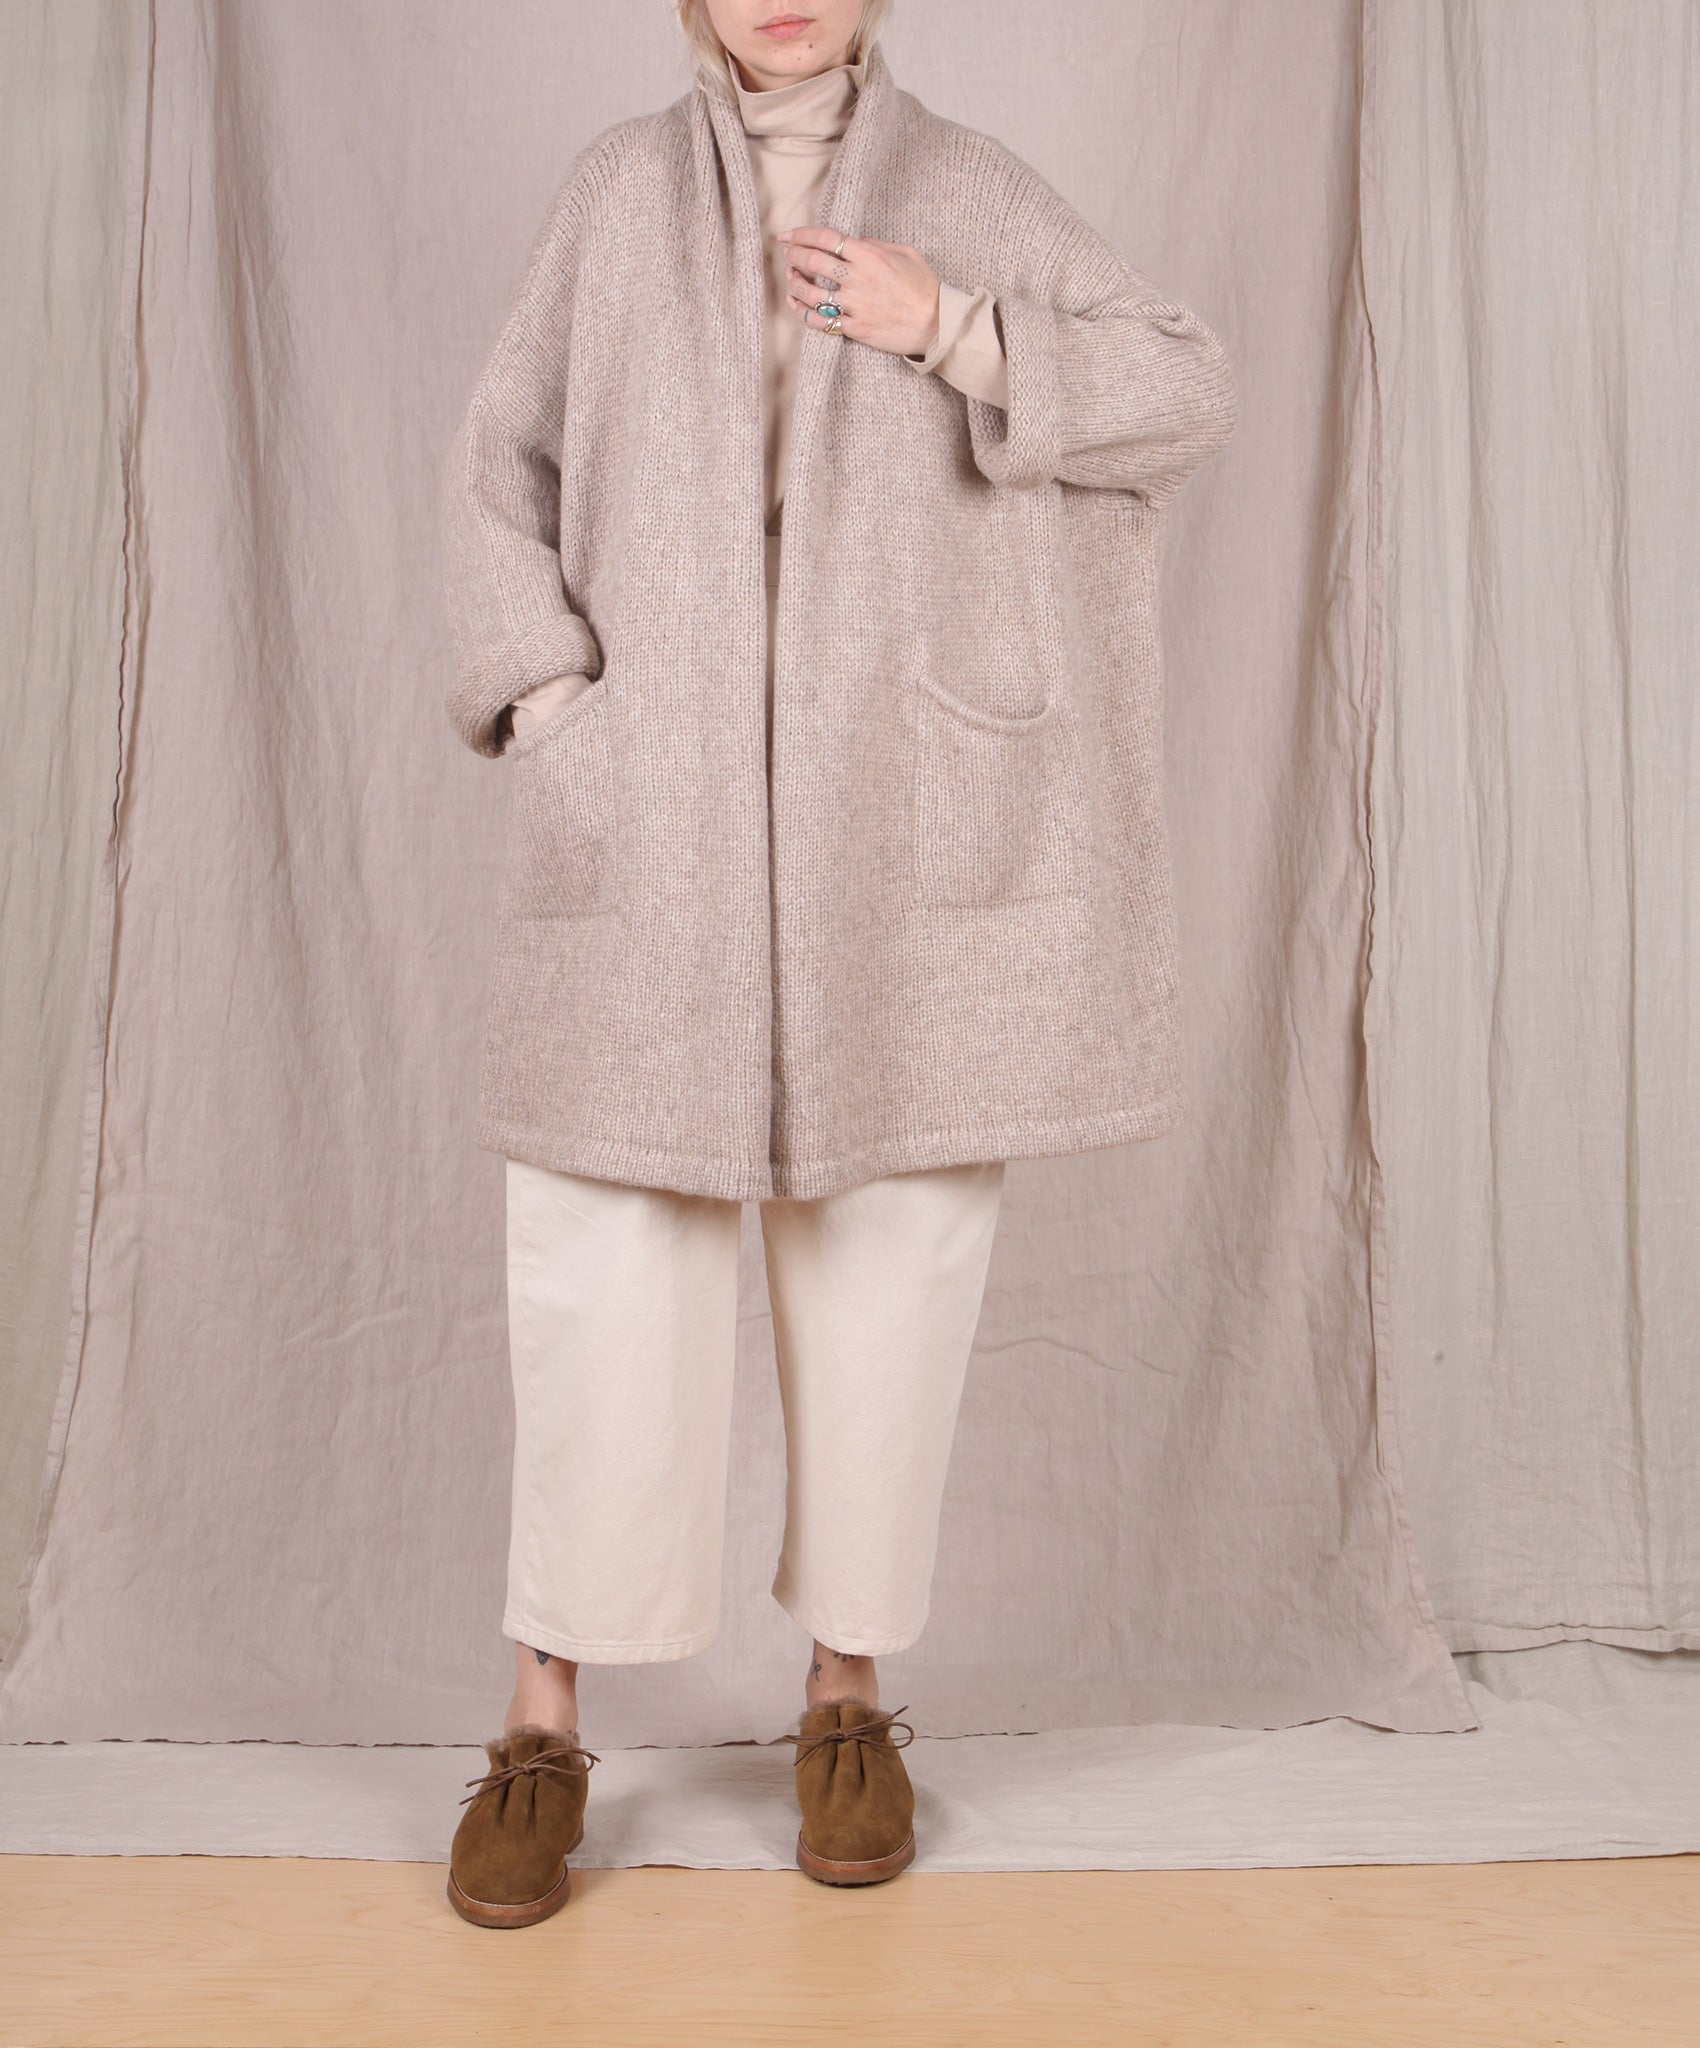 Atelier Delphine-Haori Sweater Coat // Grain